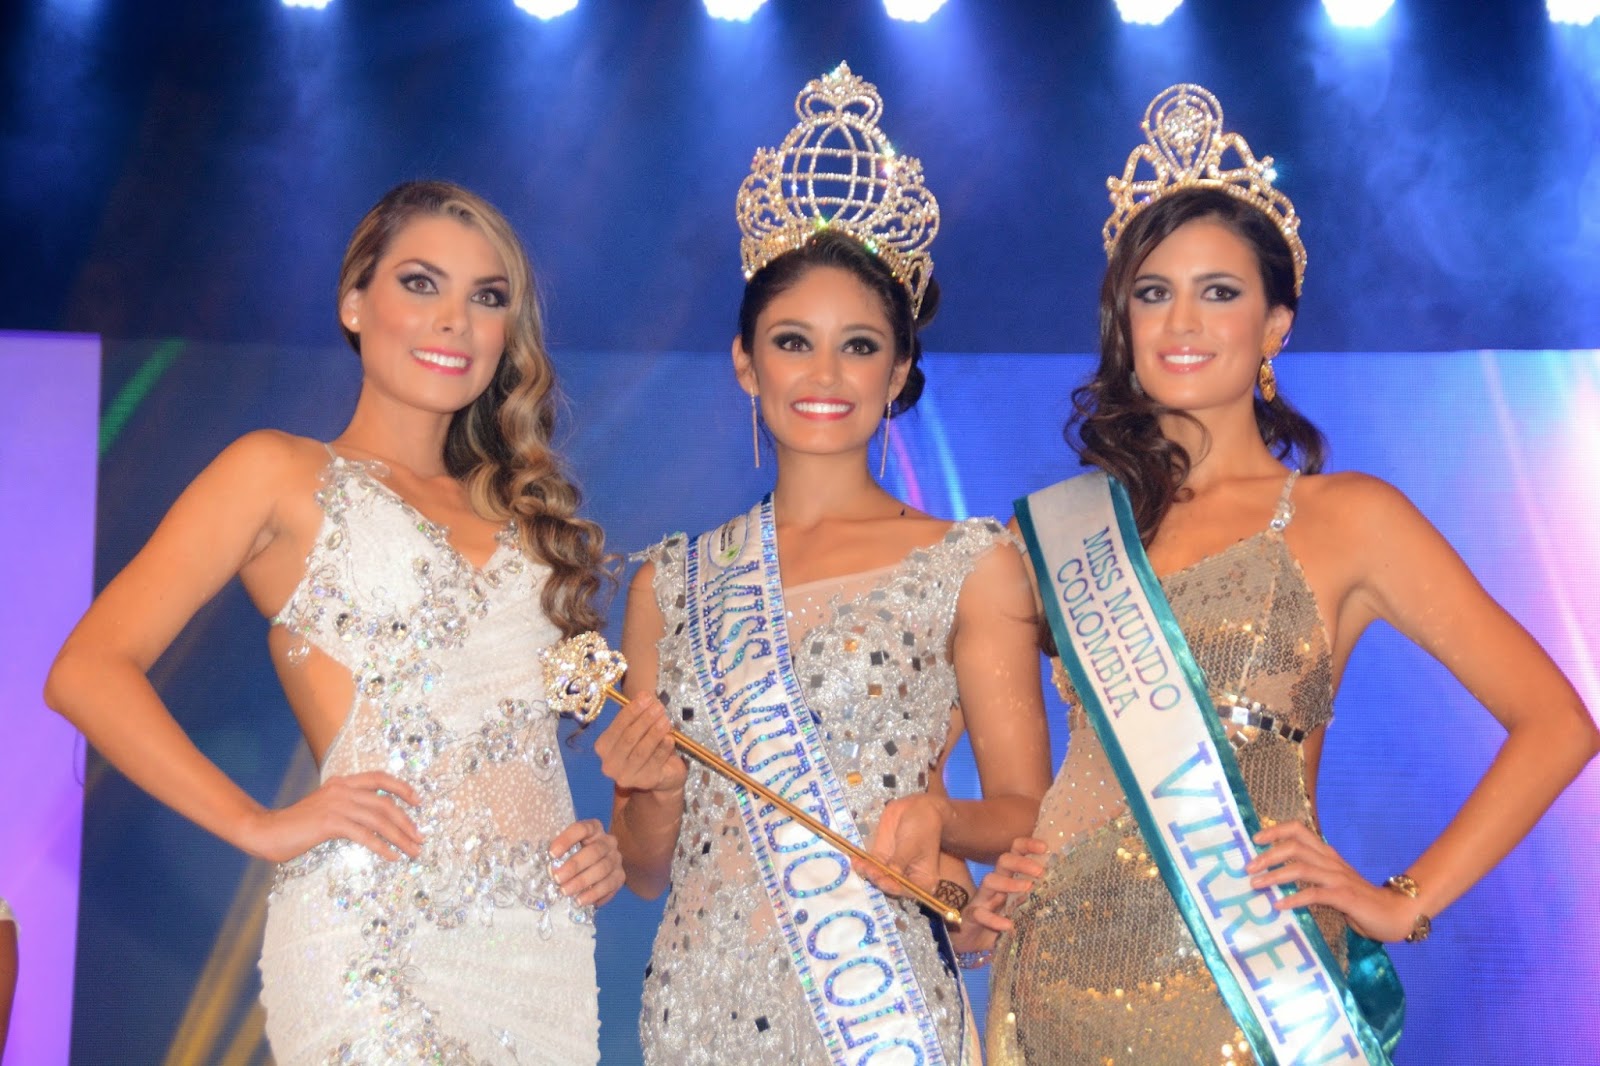 Miss World Mundo Colombia 2014 winner Jessica Leandra Garcia Caicedo